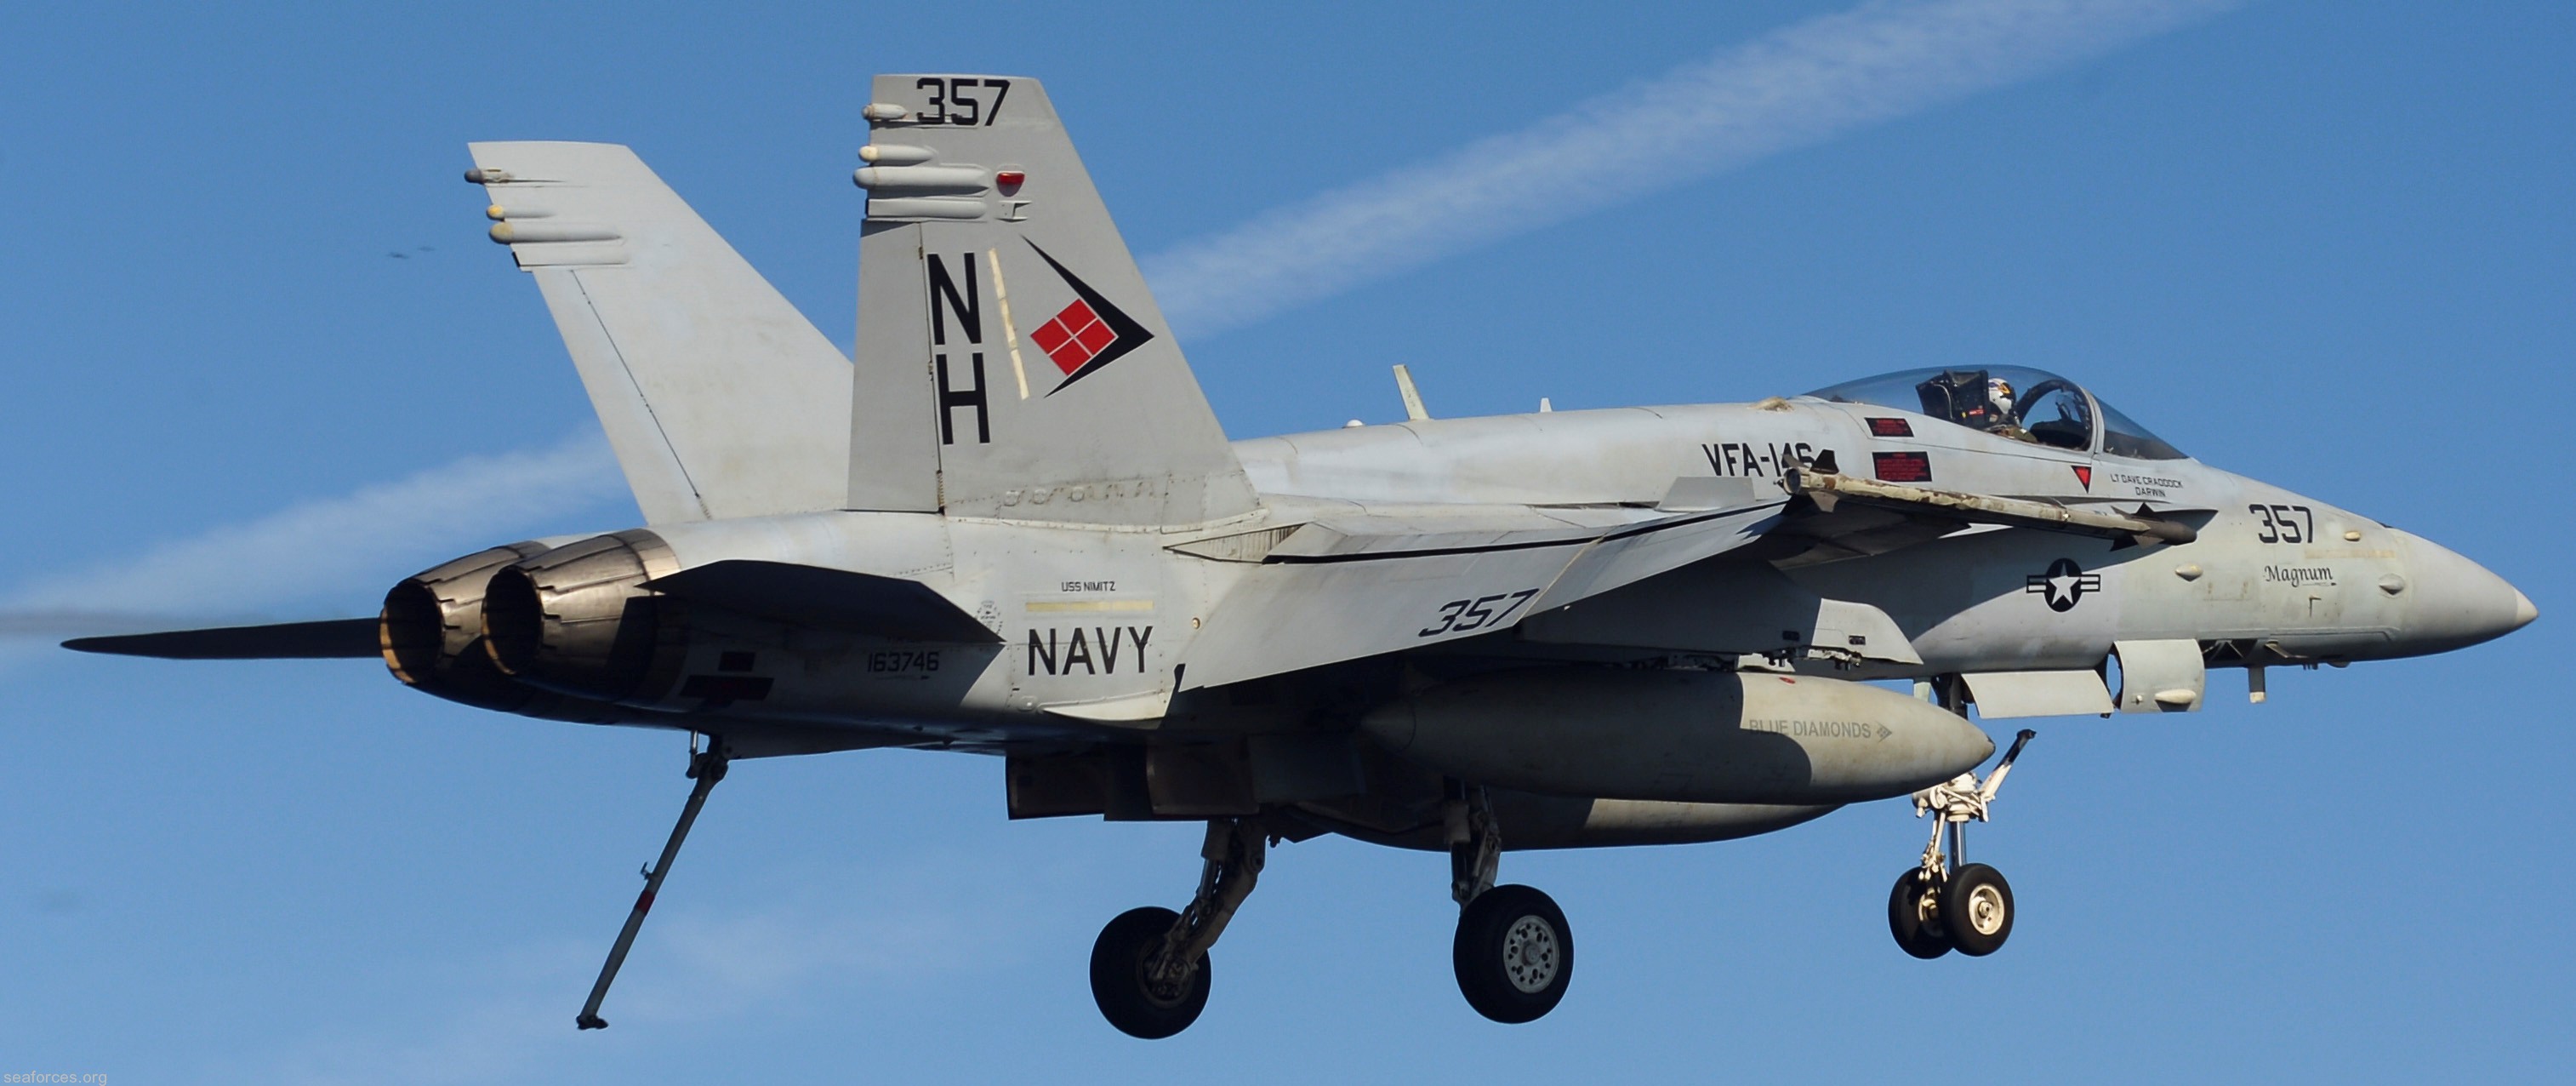 vfa-146 blue diamonds strike fighter squadron f/a-18c hornet carrier air wing cvw-11 uss nimitz cvn-68 27